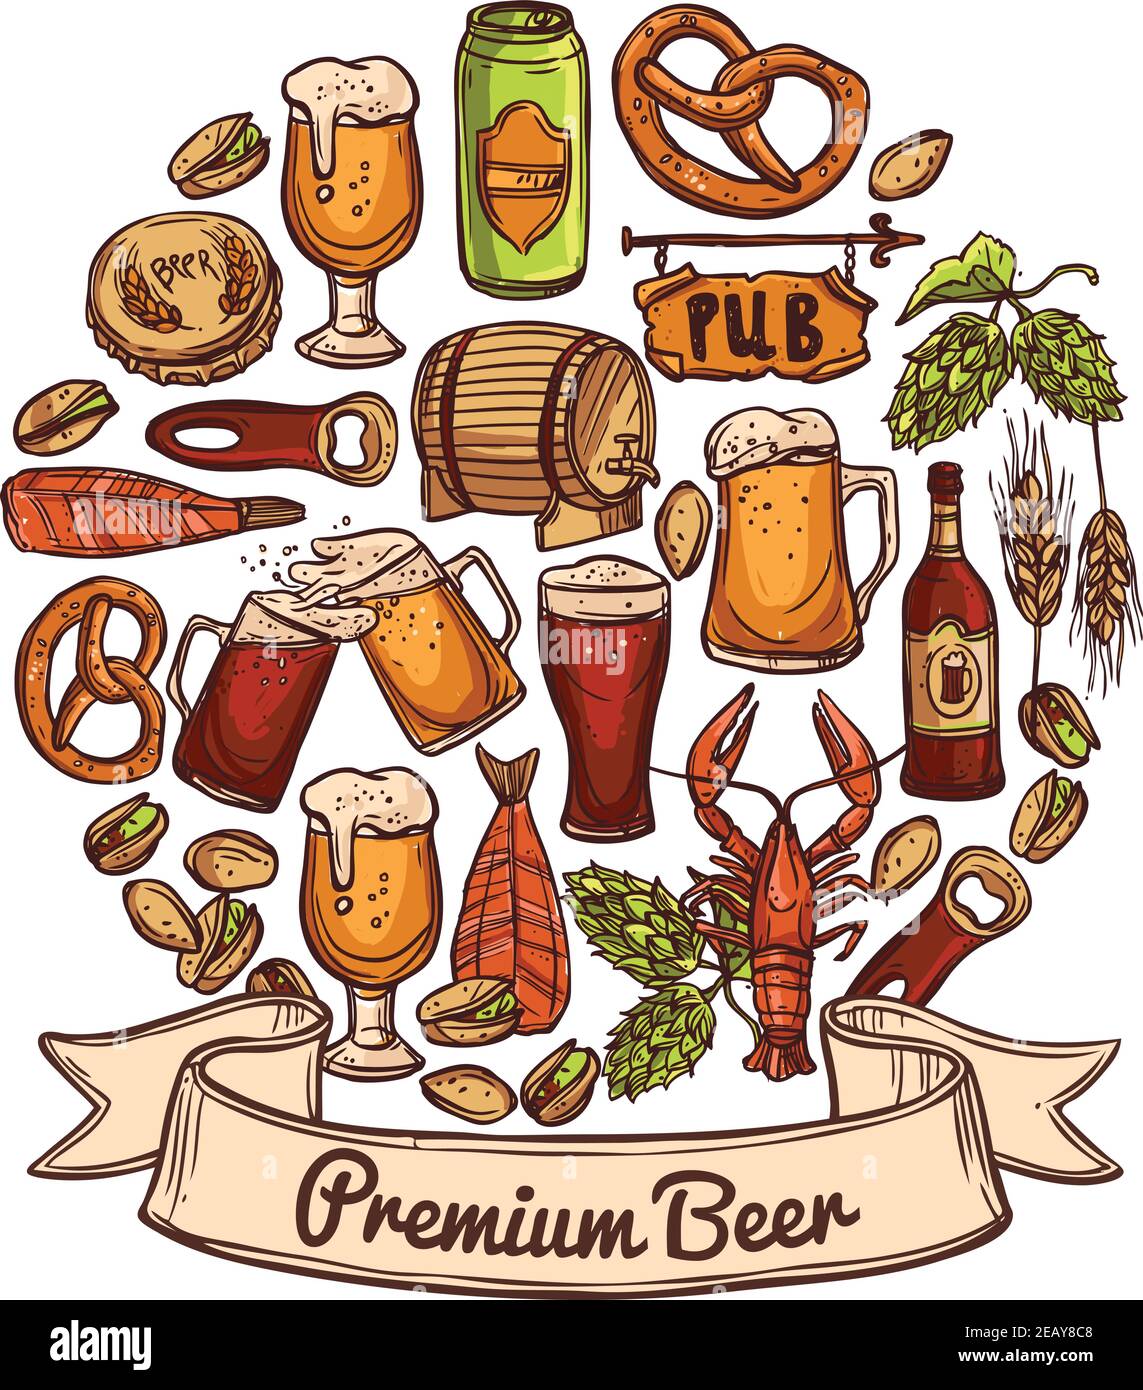 Premium beer concept sketch with jugs can opener bottle cask cap snacks hops nuts crayfish and shrimps vector illustration Stock Vector